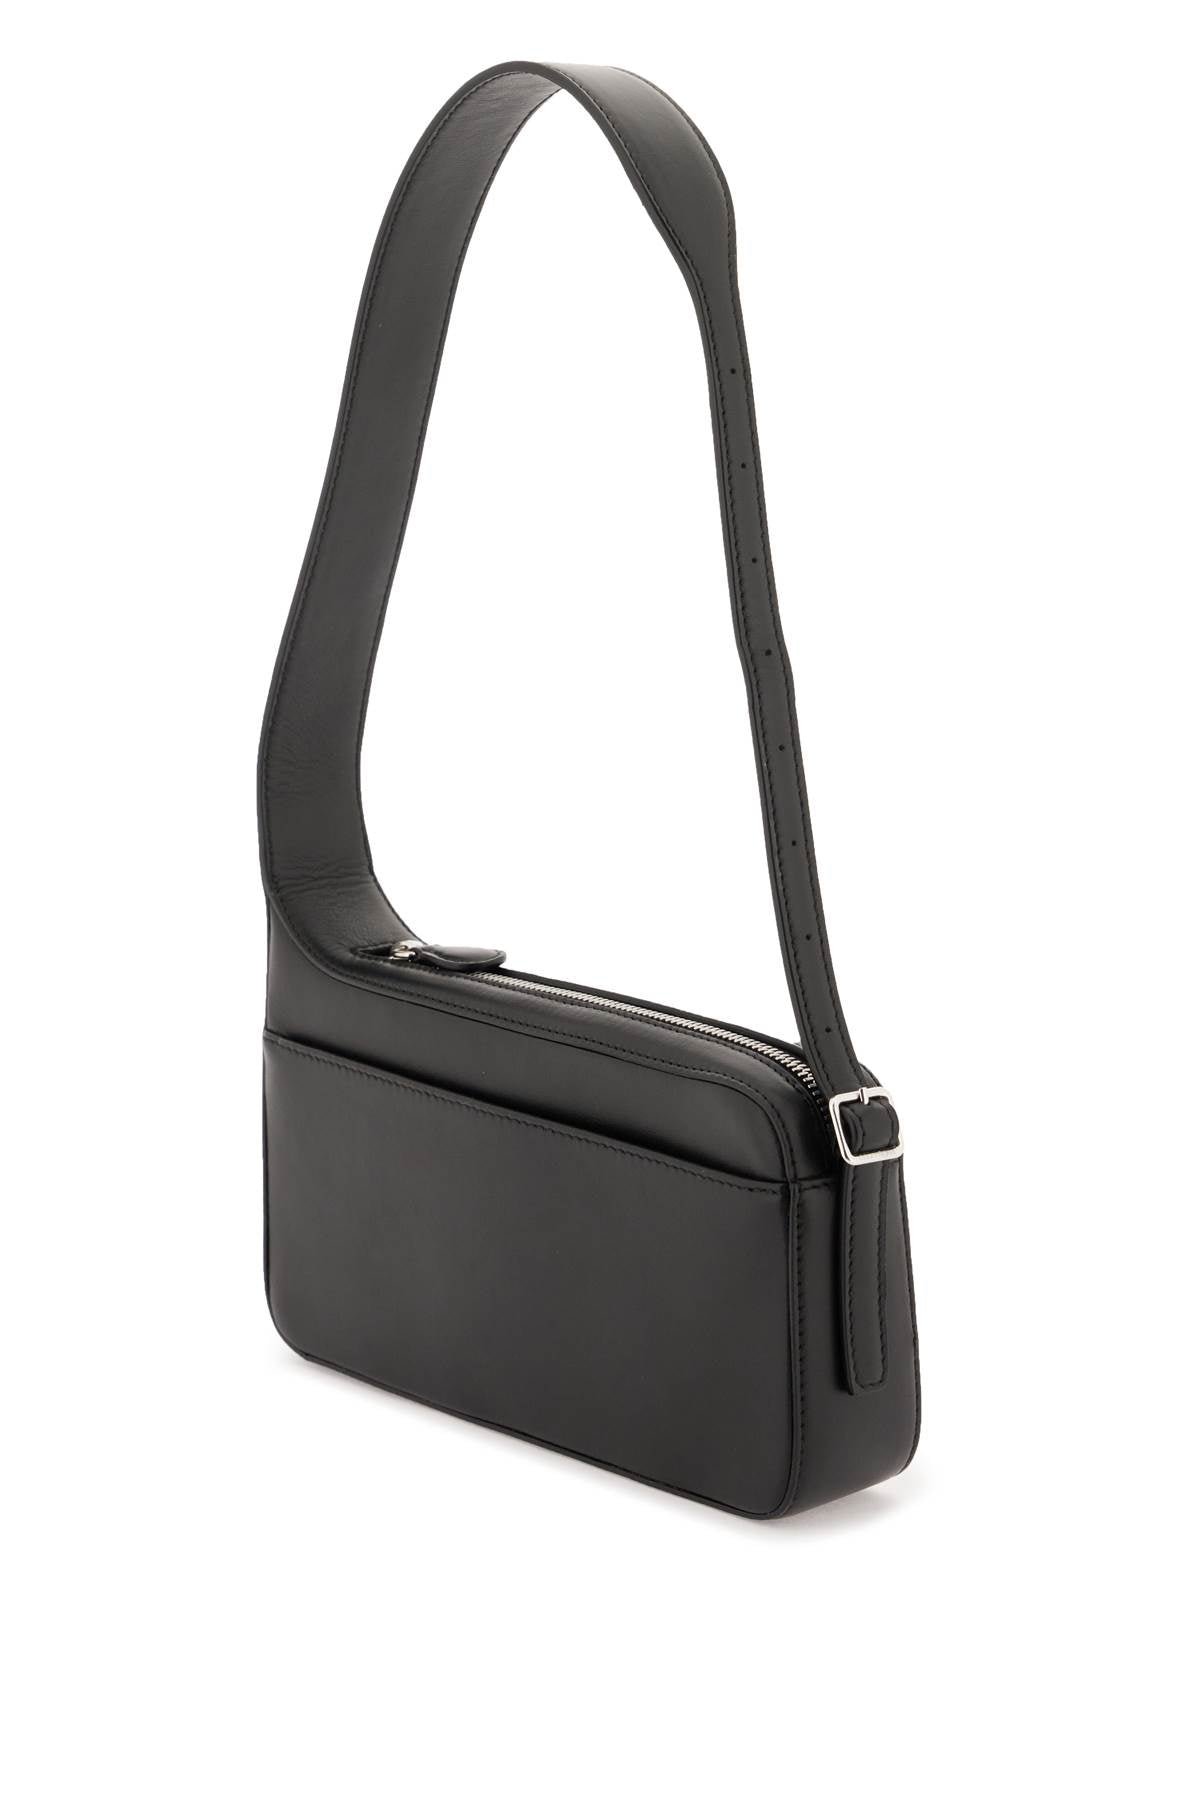 COURREGÈS Sleek and Sophisticated Black Leather Crossbody Handbag